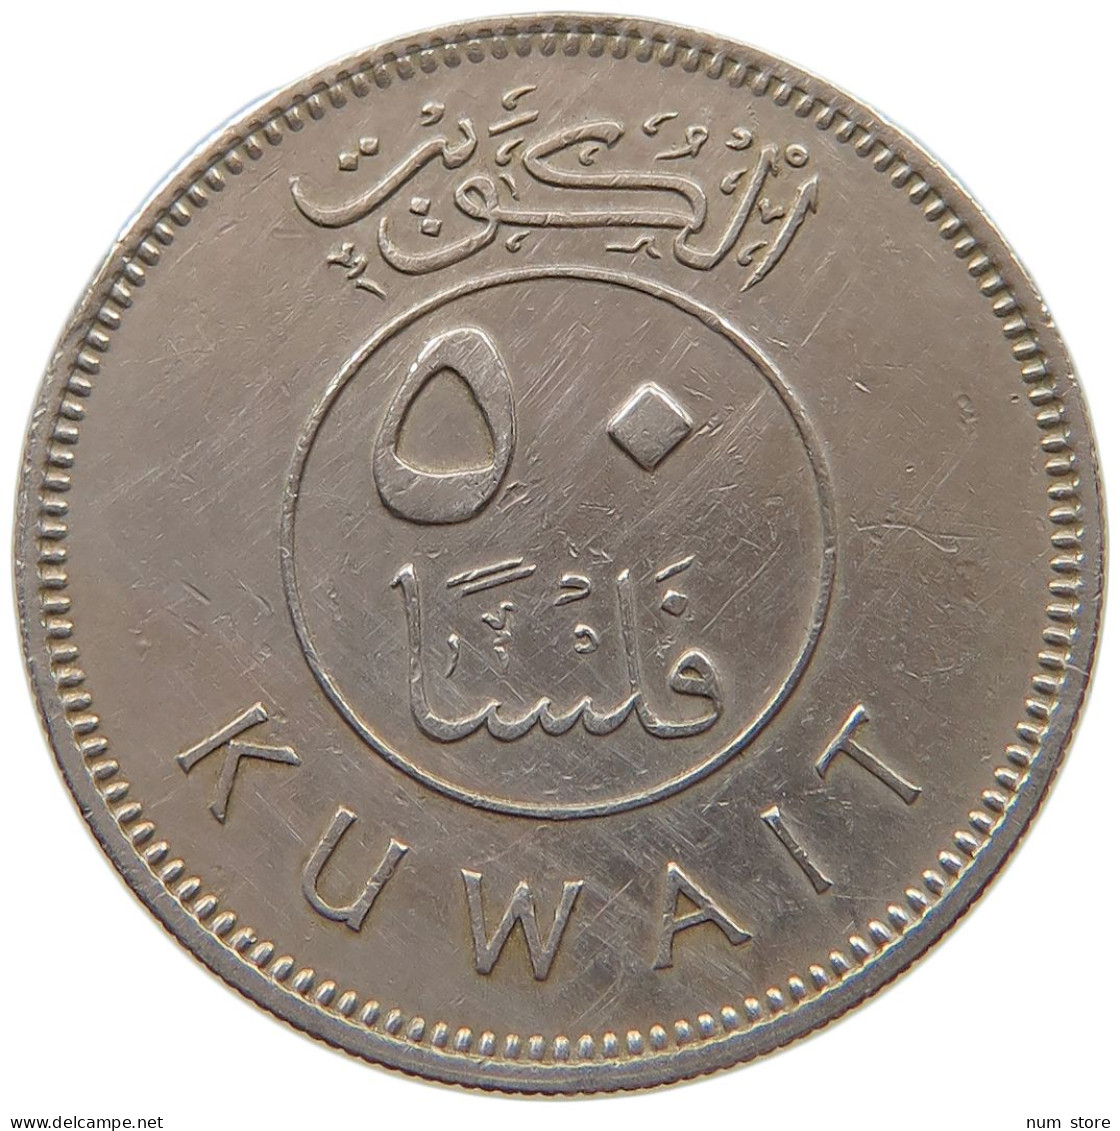 KUWAIT 50 FILS 1974  #c073 0173 - Kuwait